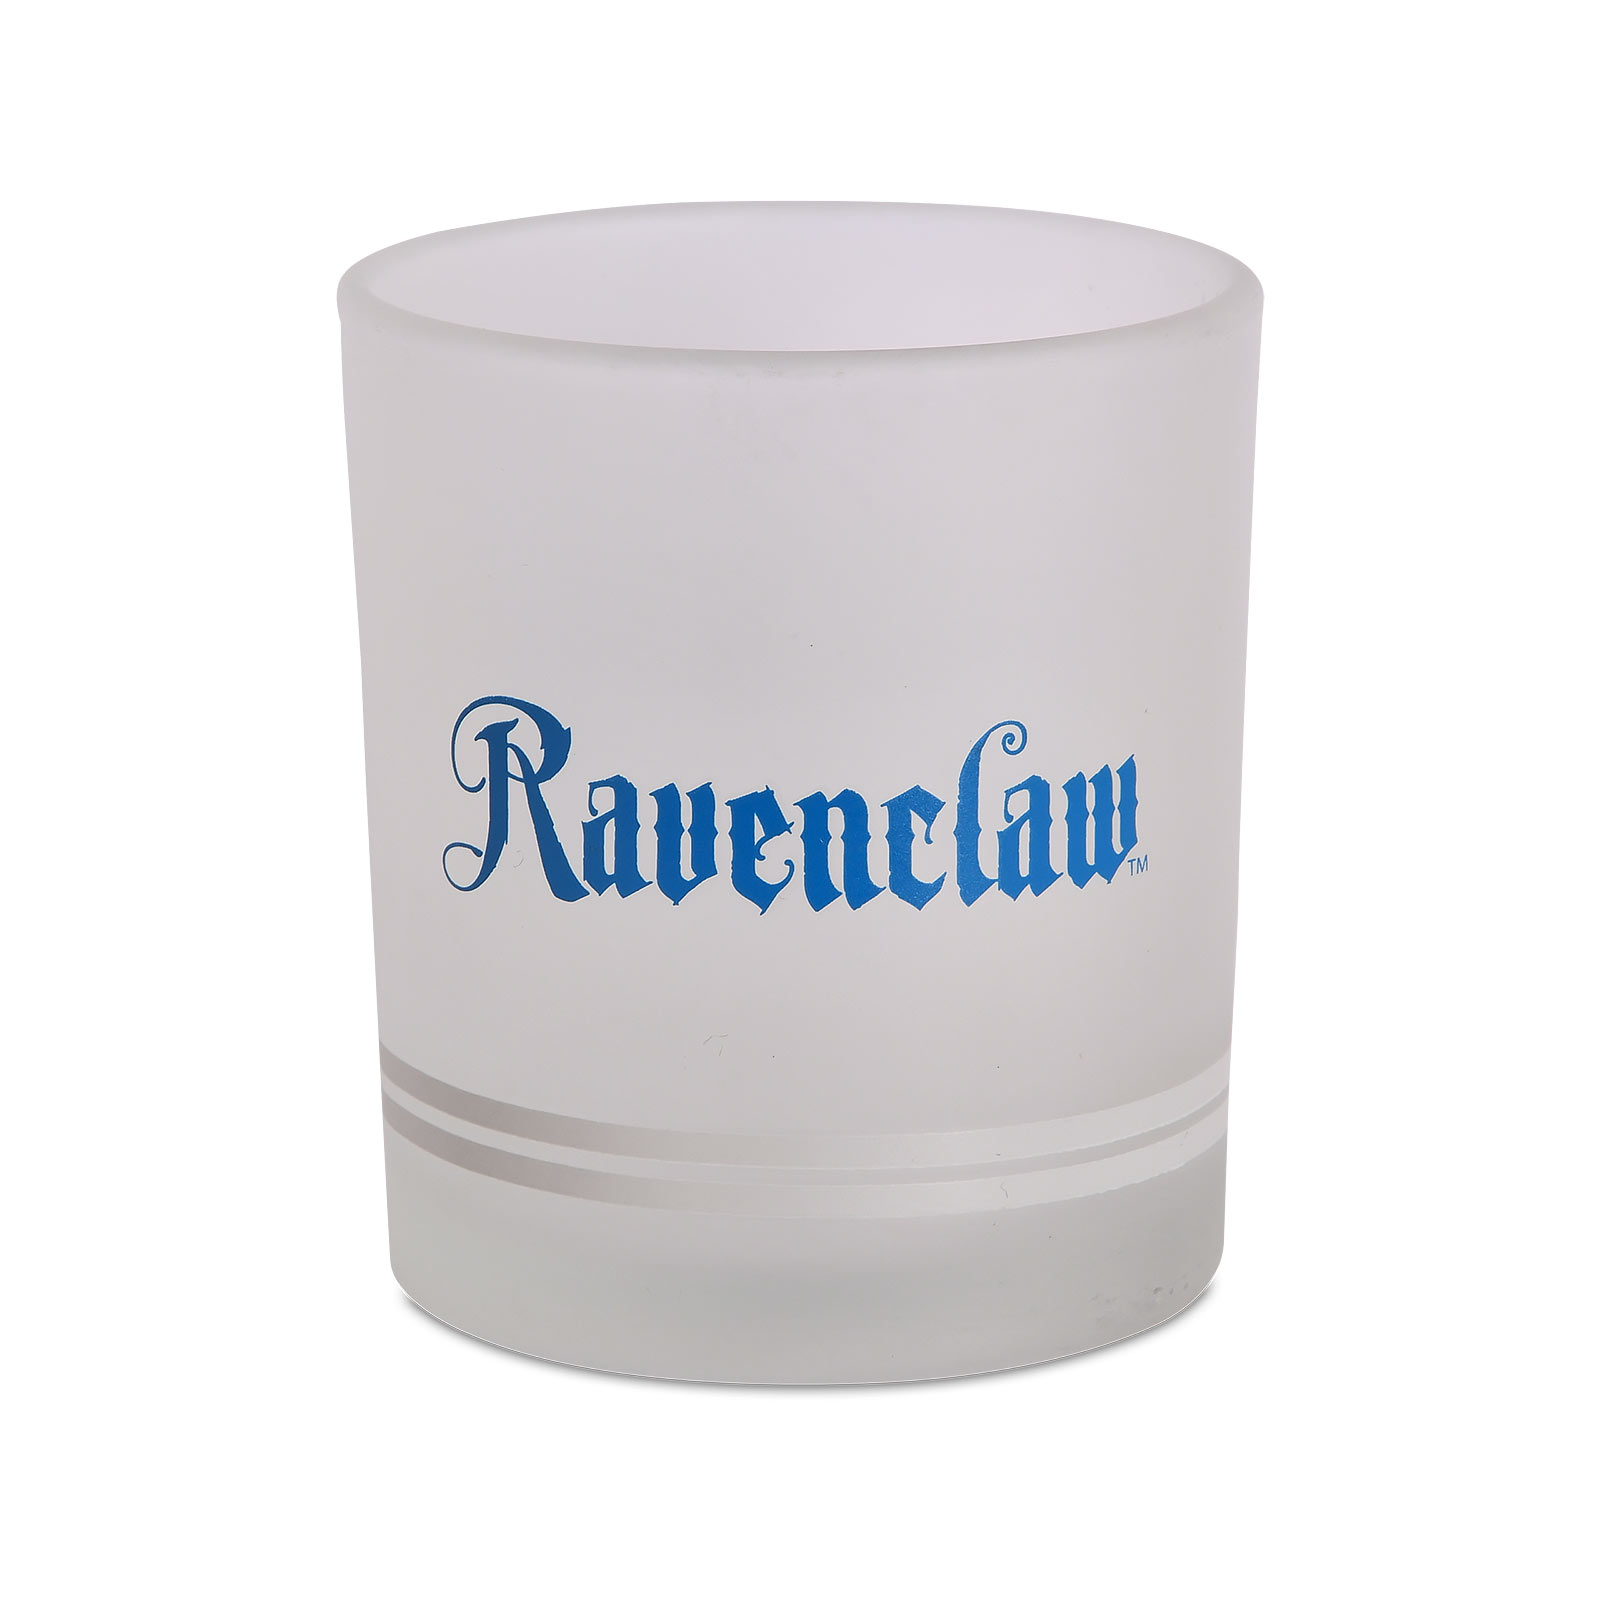 Harry Potter - Ravenclaw Crest Milk Glass Tumbler